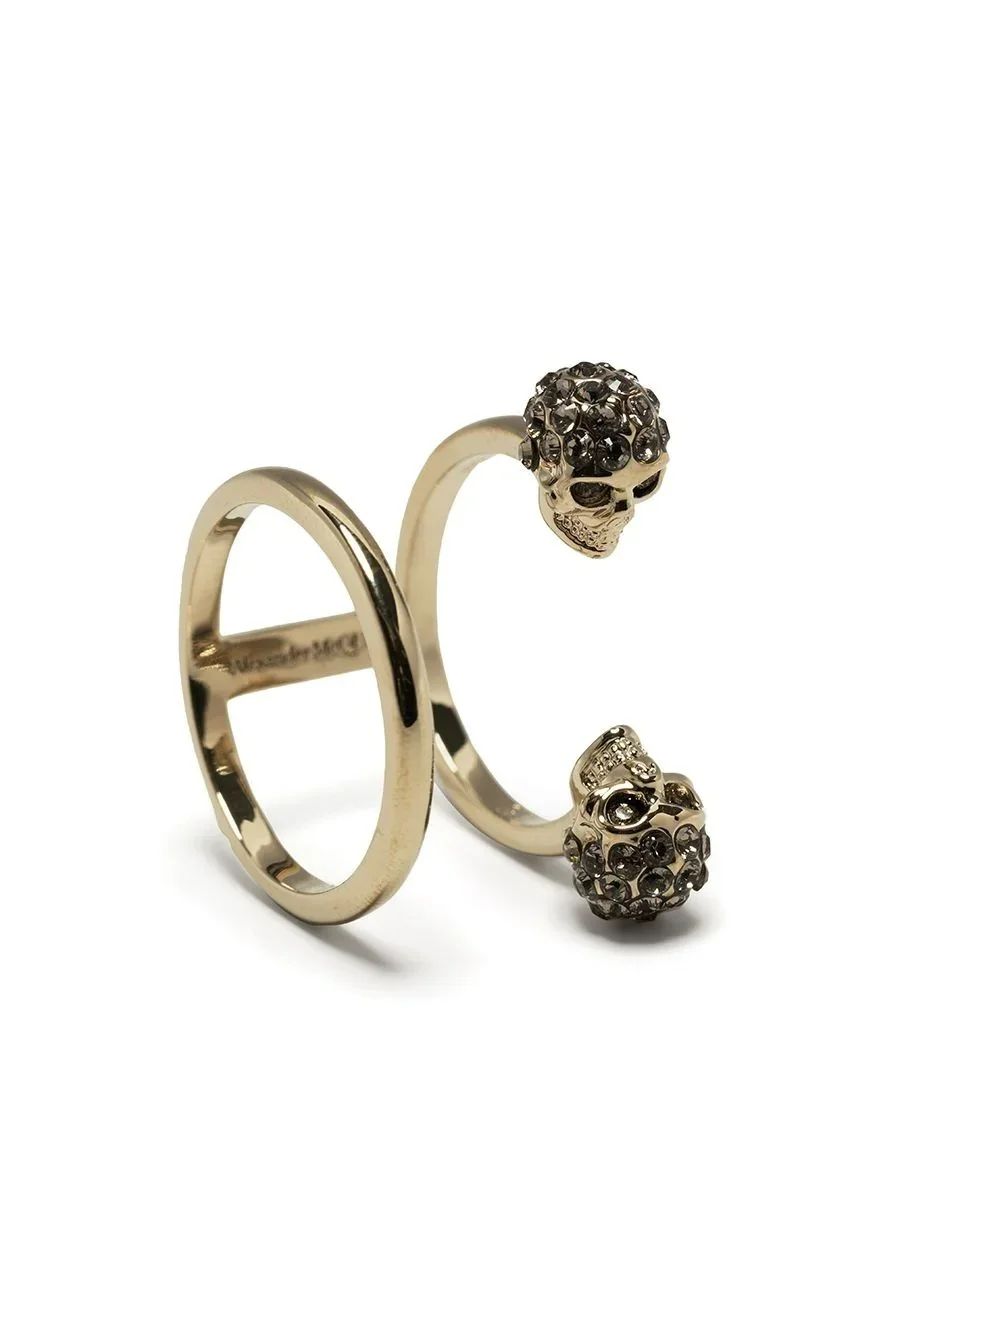 Alexander McQueen Double Skull Ring | Cettire Global